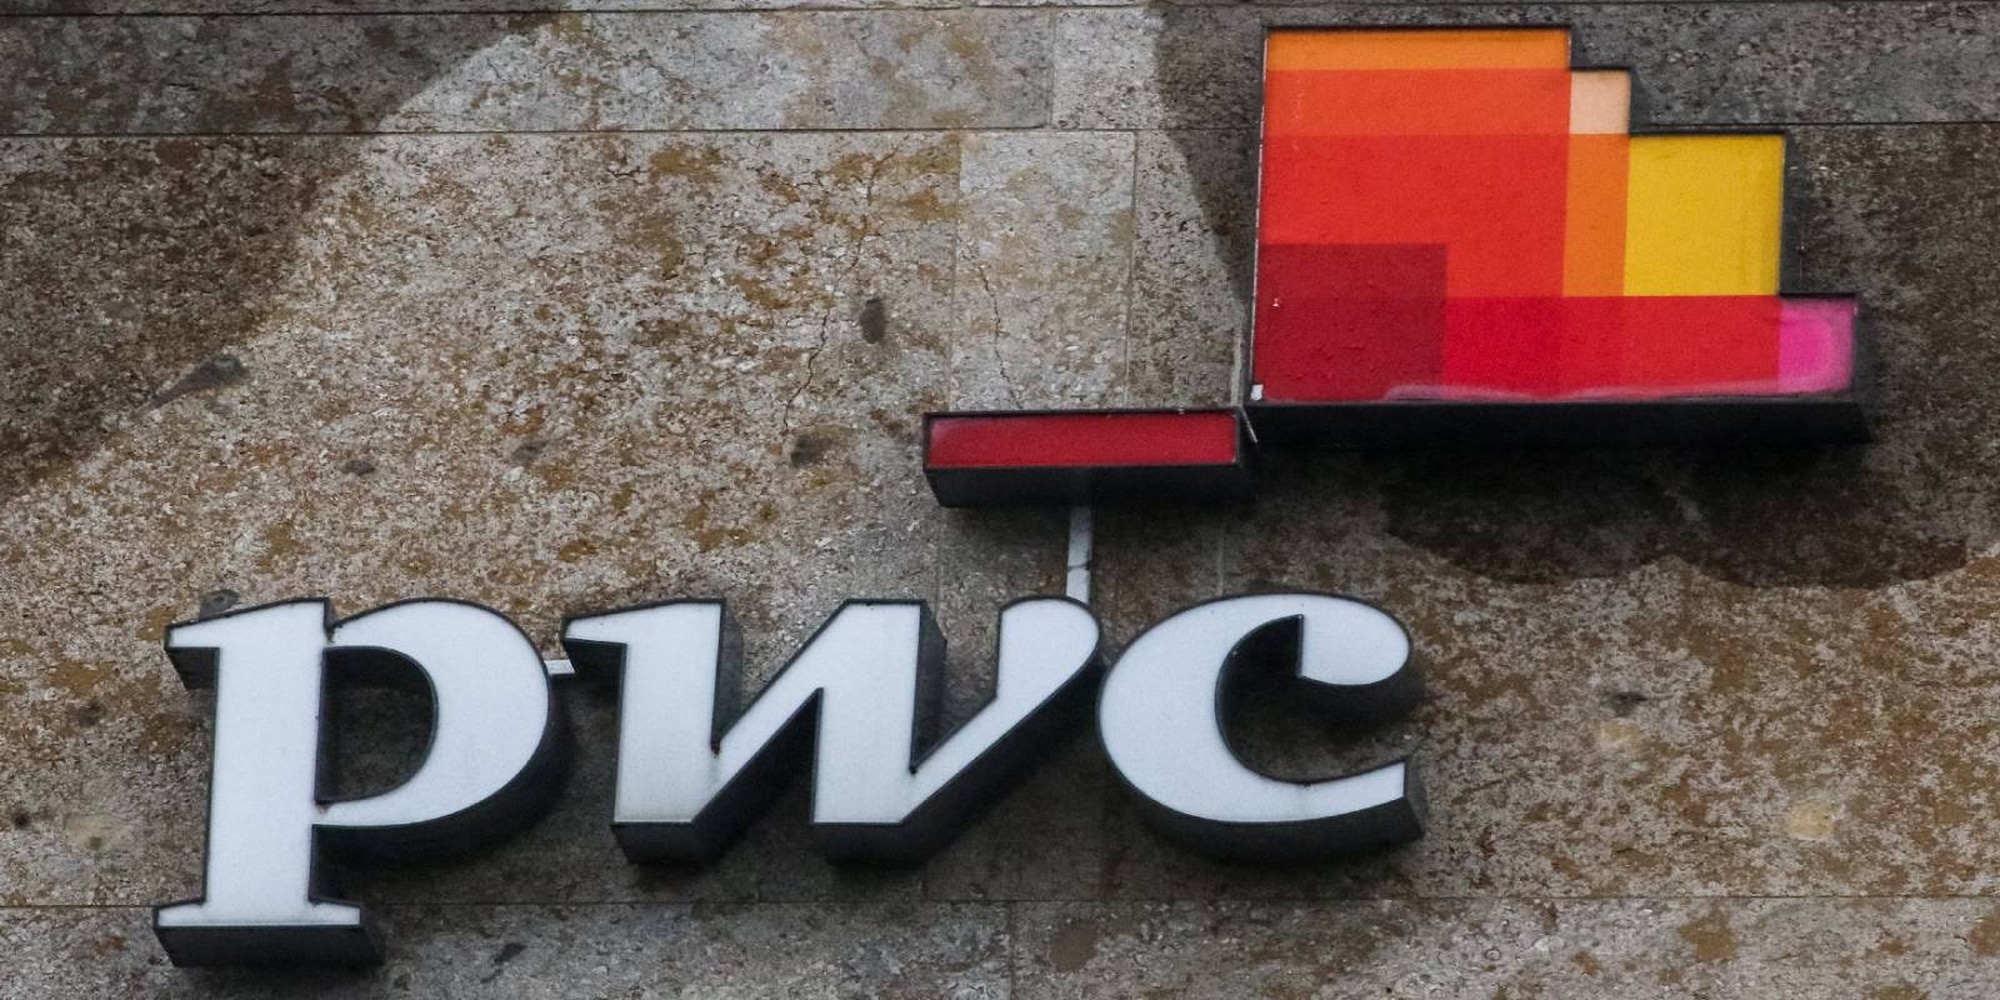 PWC-PricewaterhouseCoopers